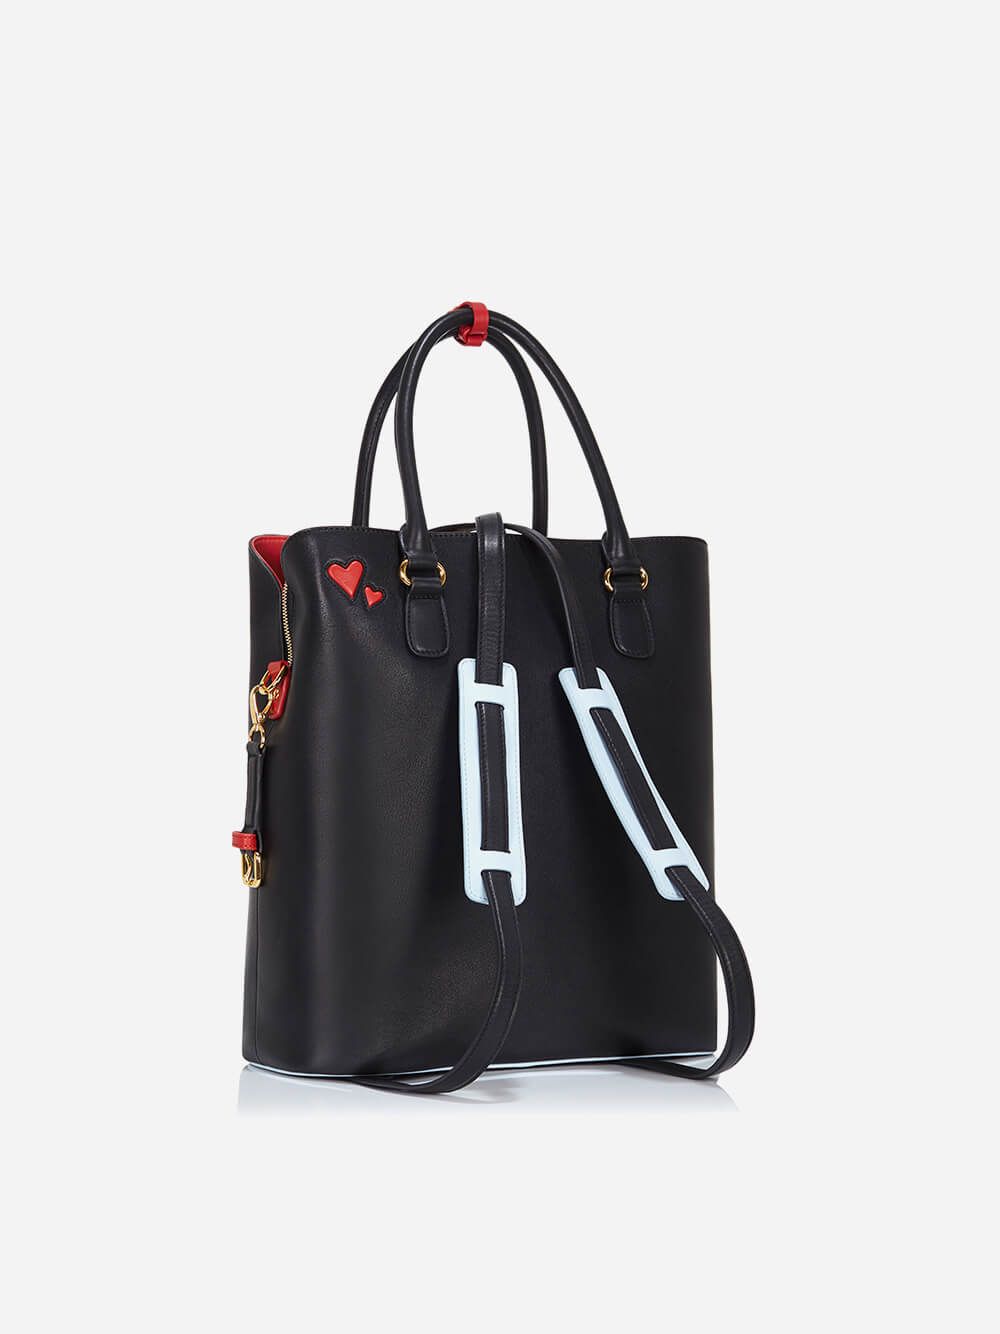 L Black Red Bag | Any Di 